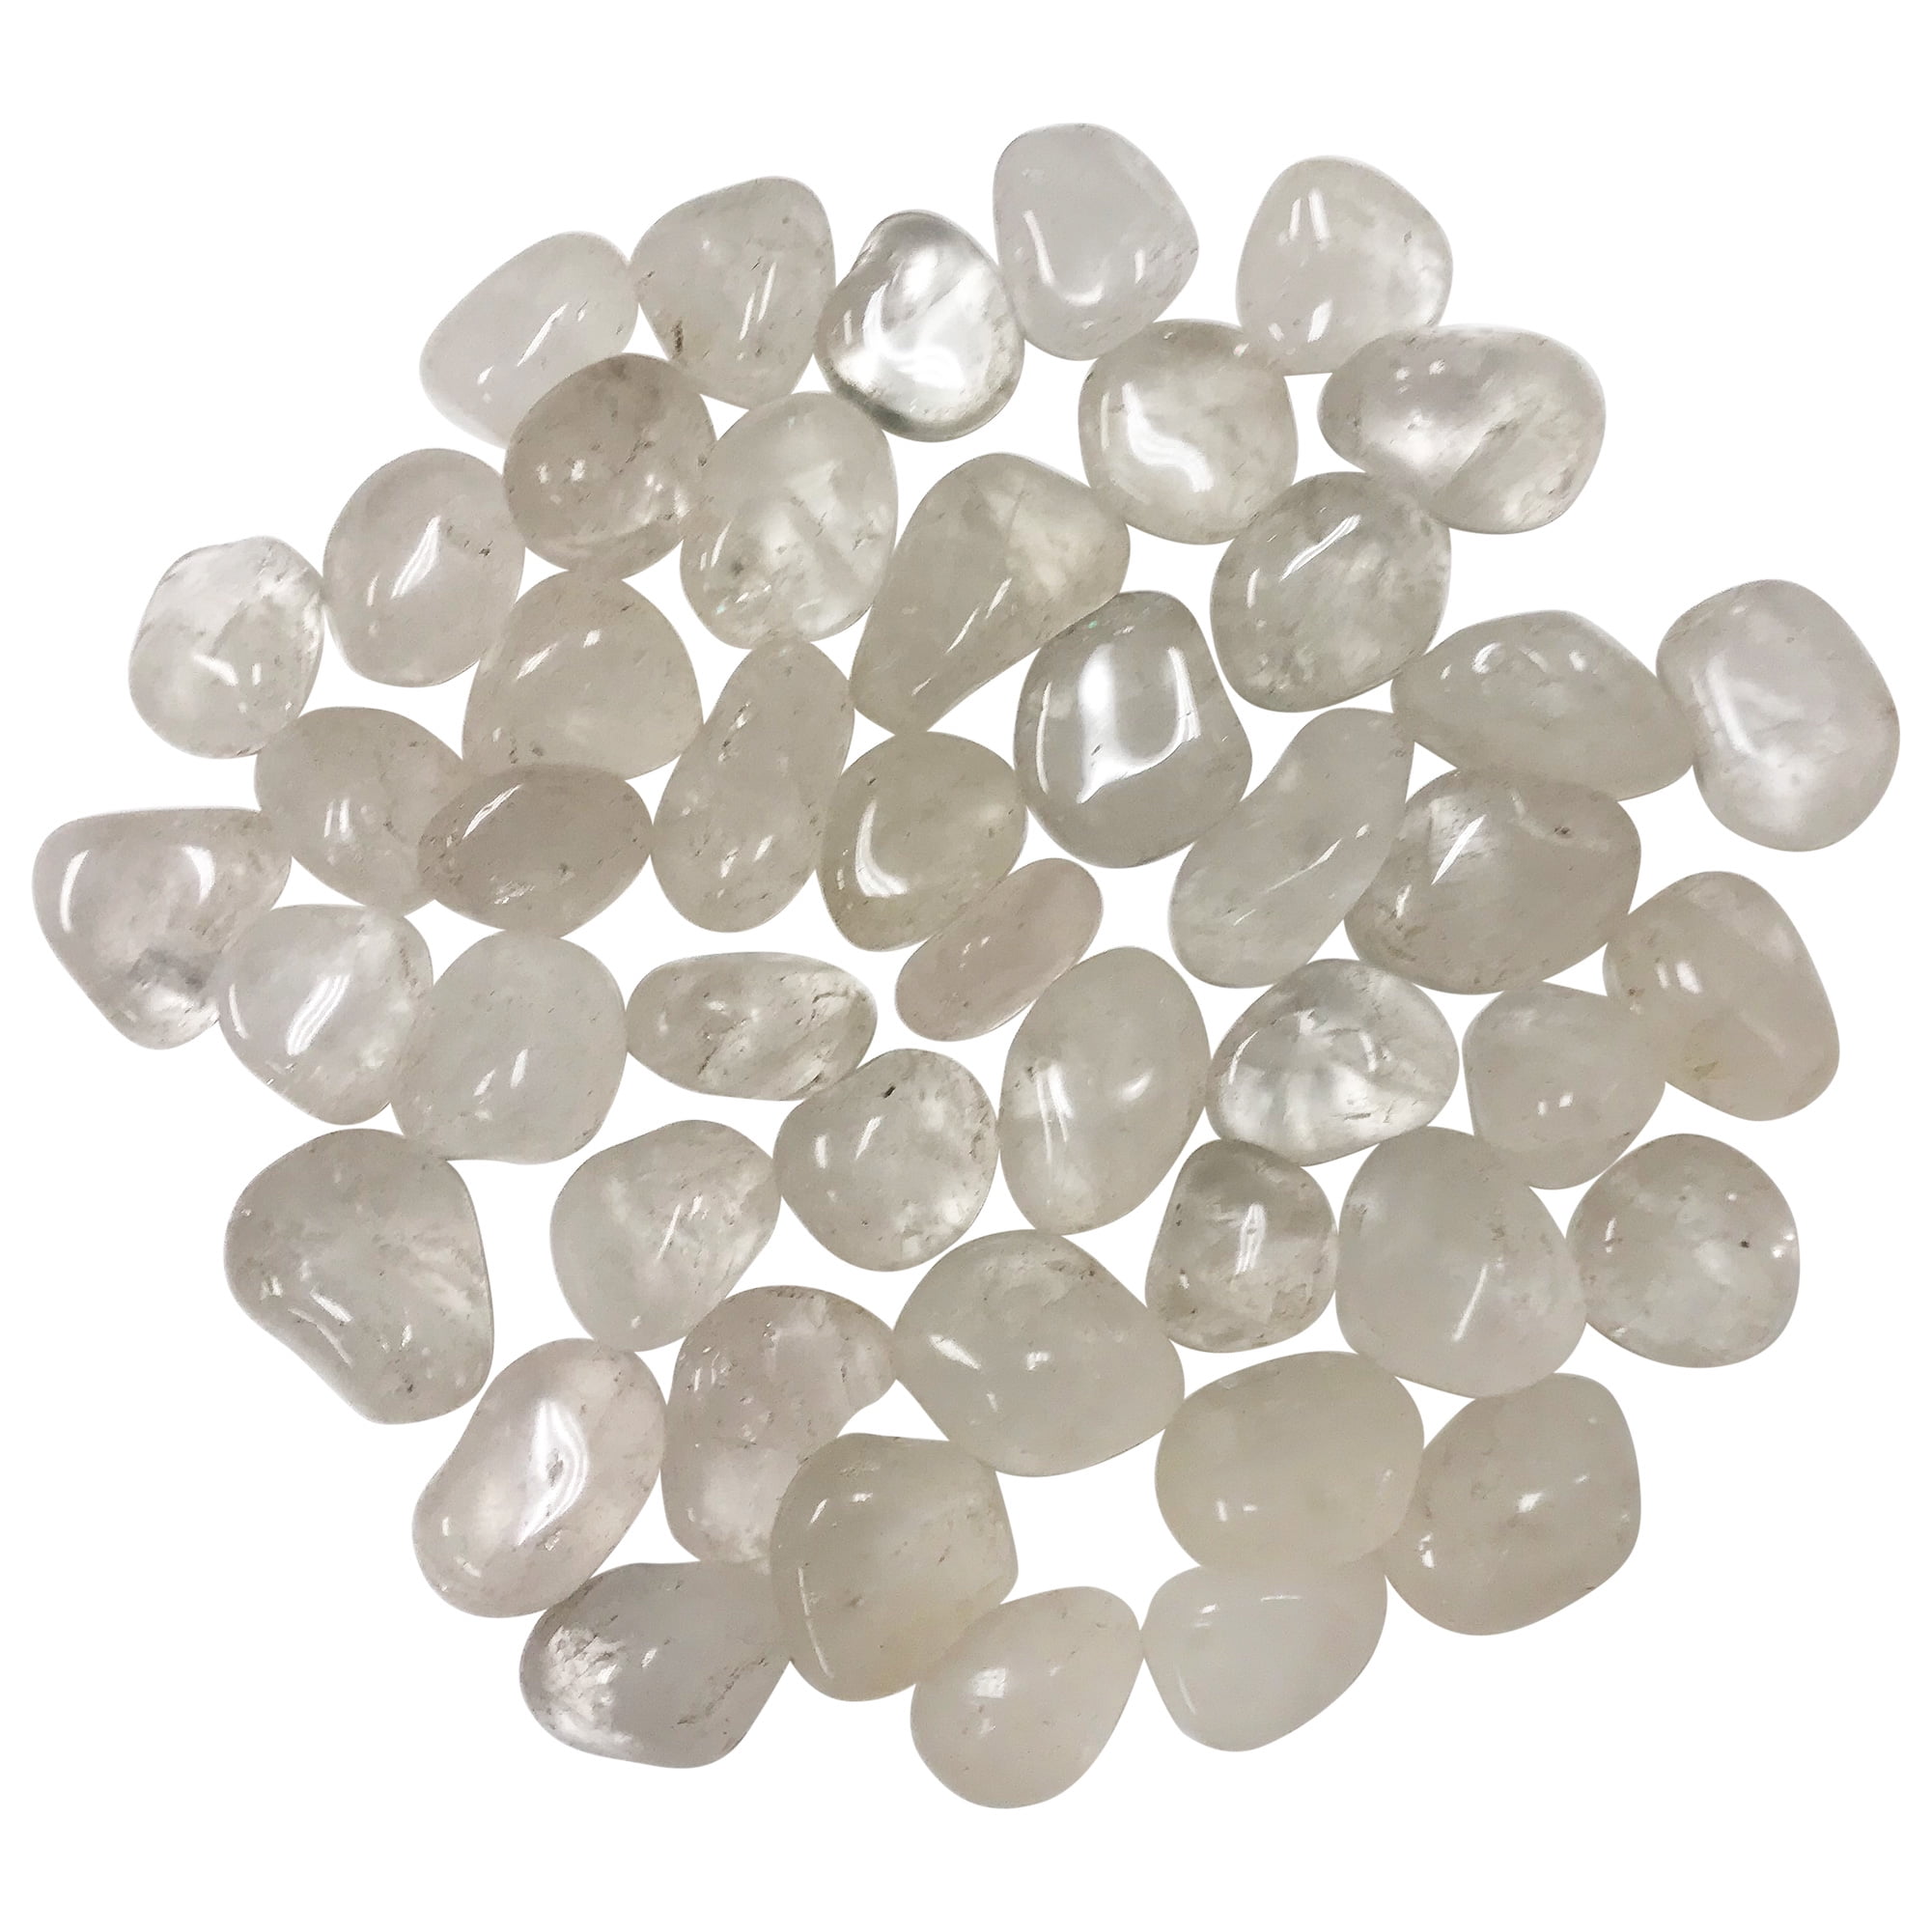 1 lb Tumbled Clear Quartz Gemstone Crystals 45-60 Stones Bulk Gem Rock Specimens 